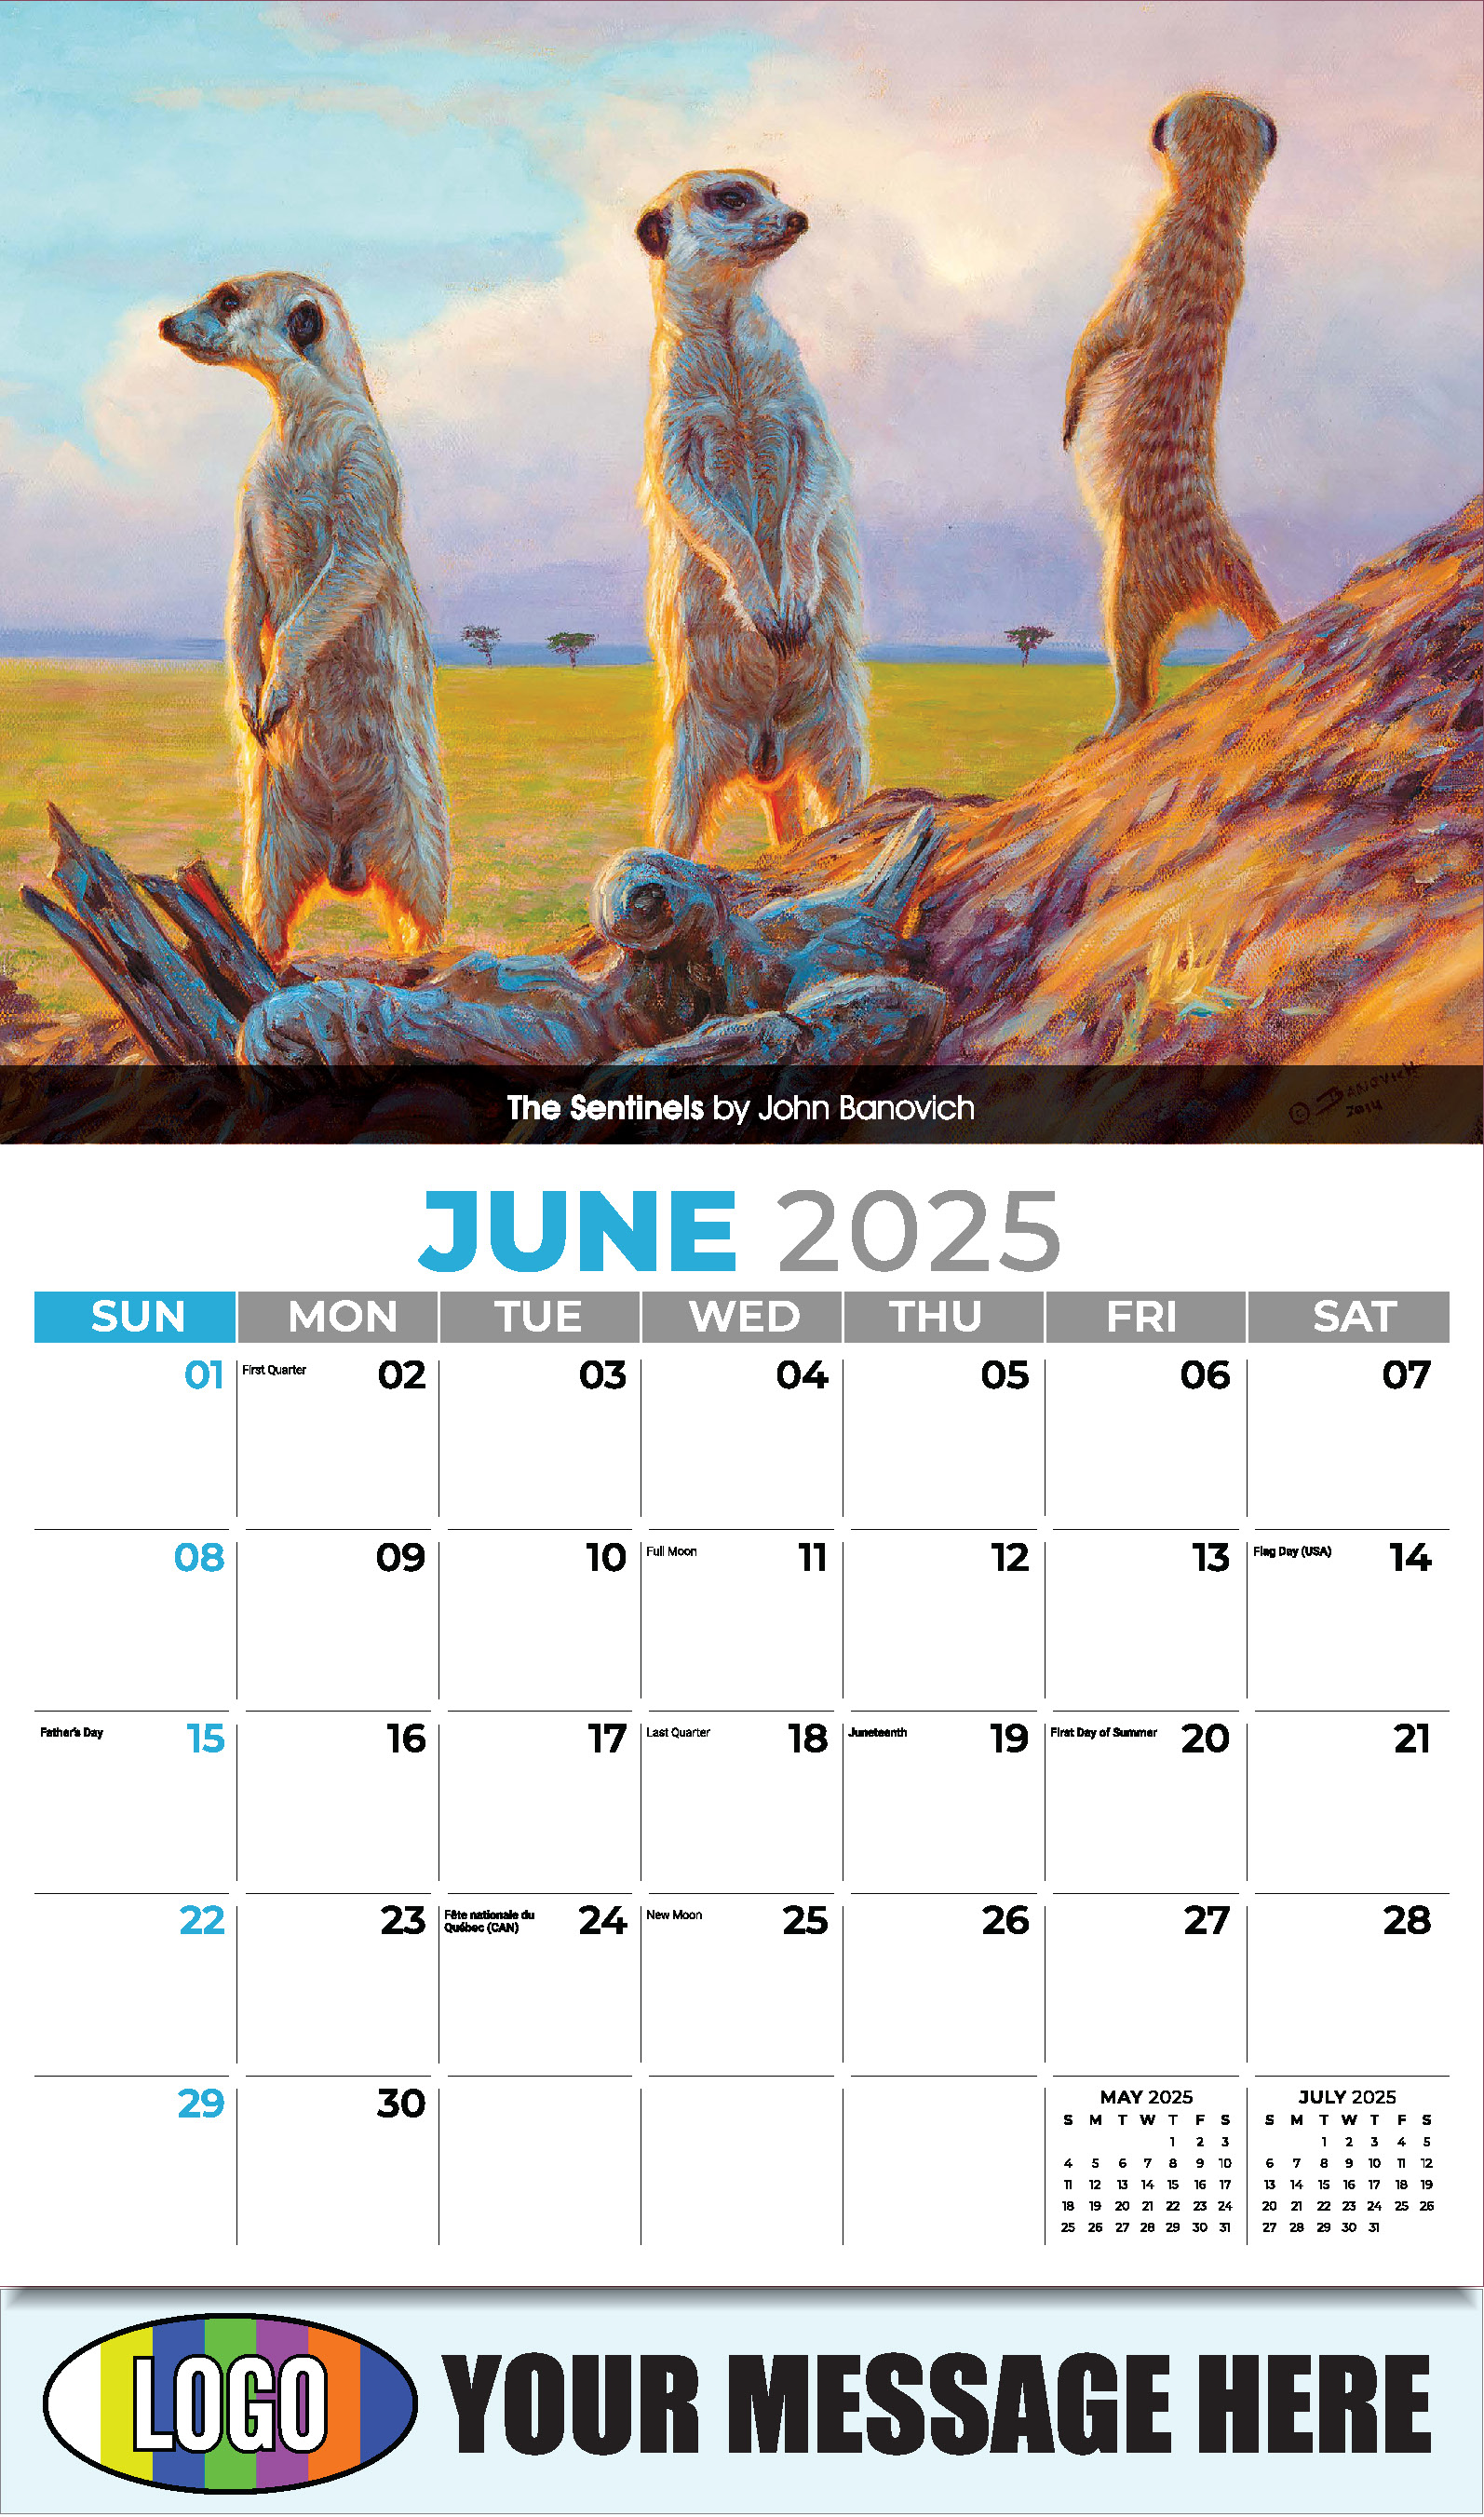 Wildlife Art Portraits 2025 Business Promotion Wall Calendar - June